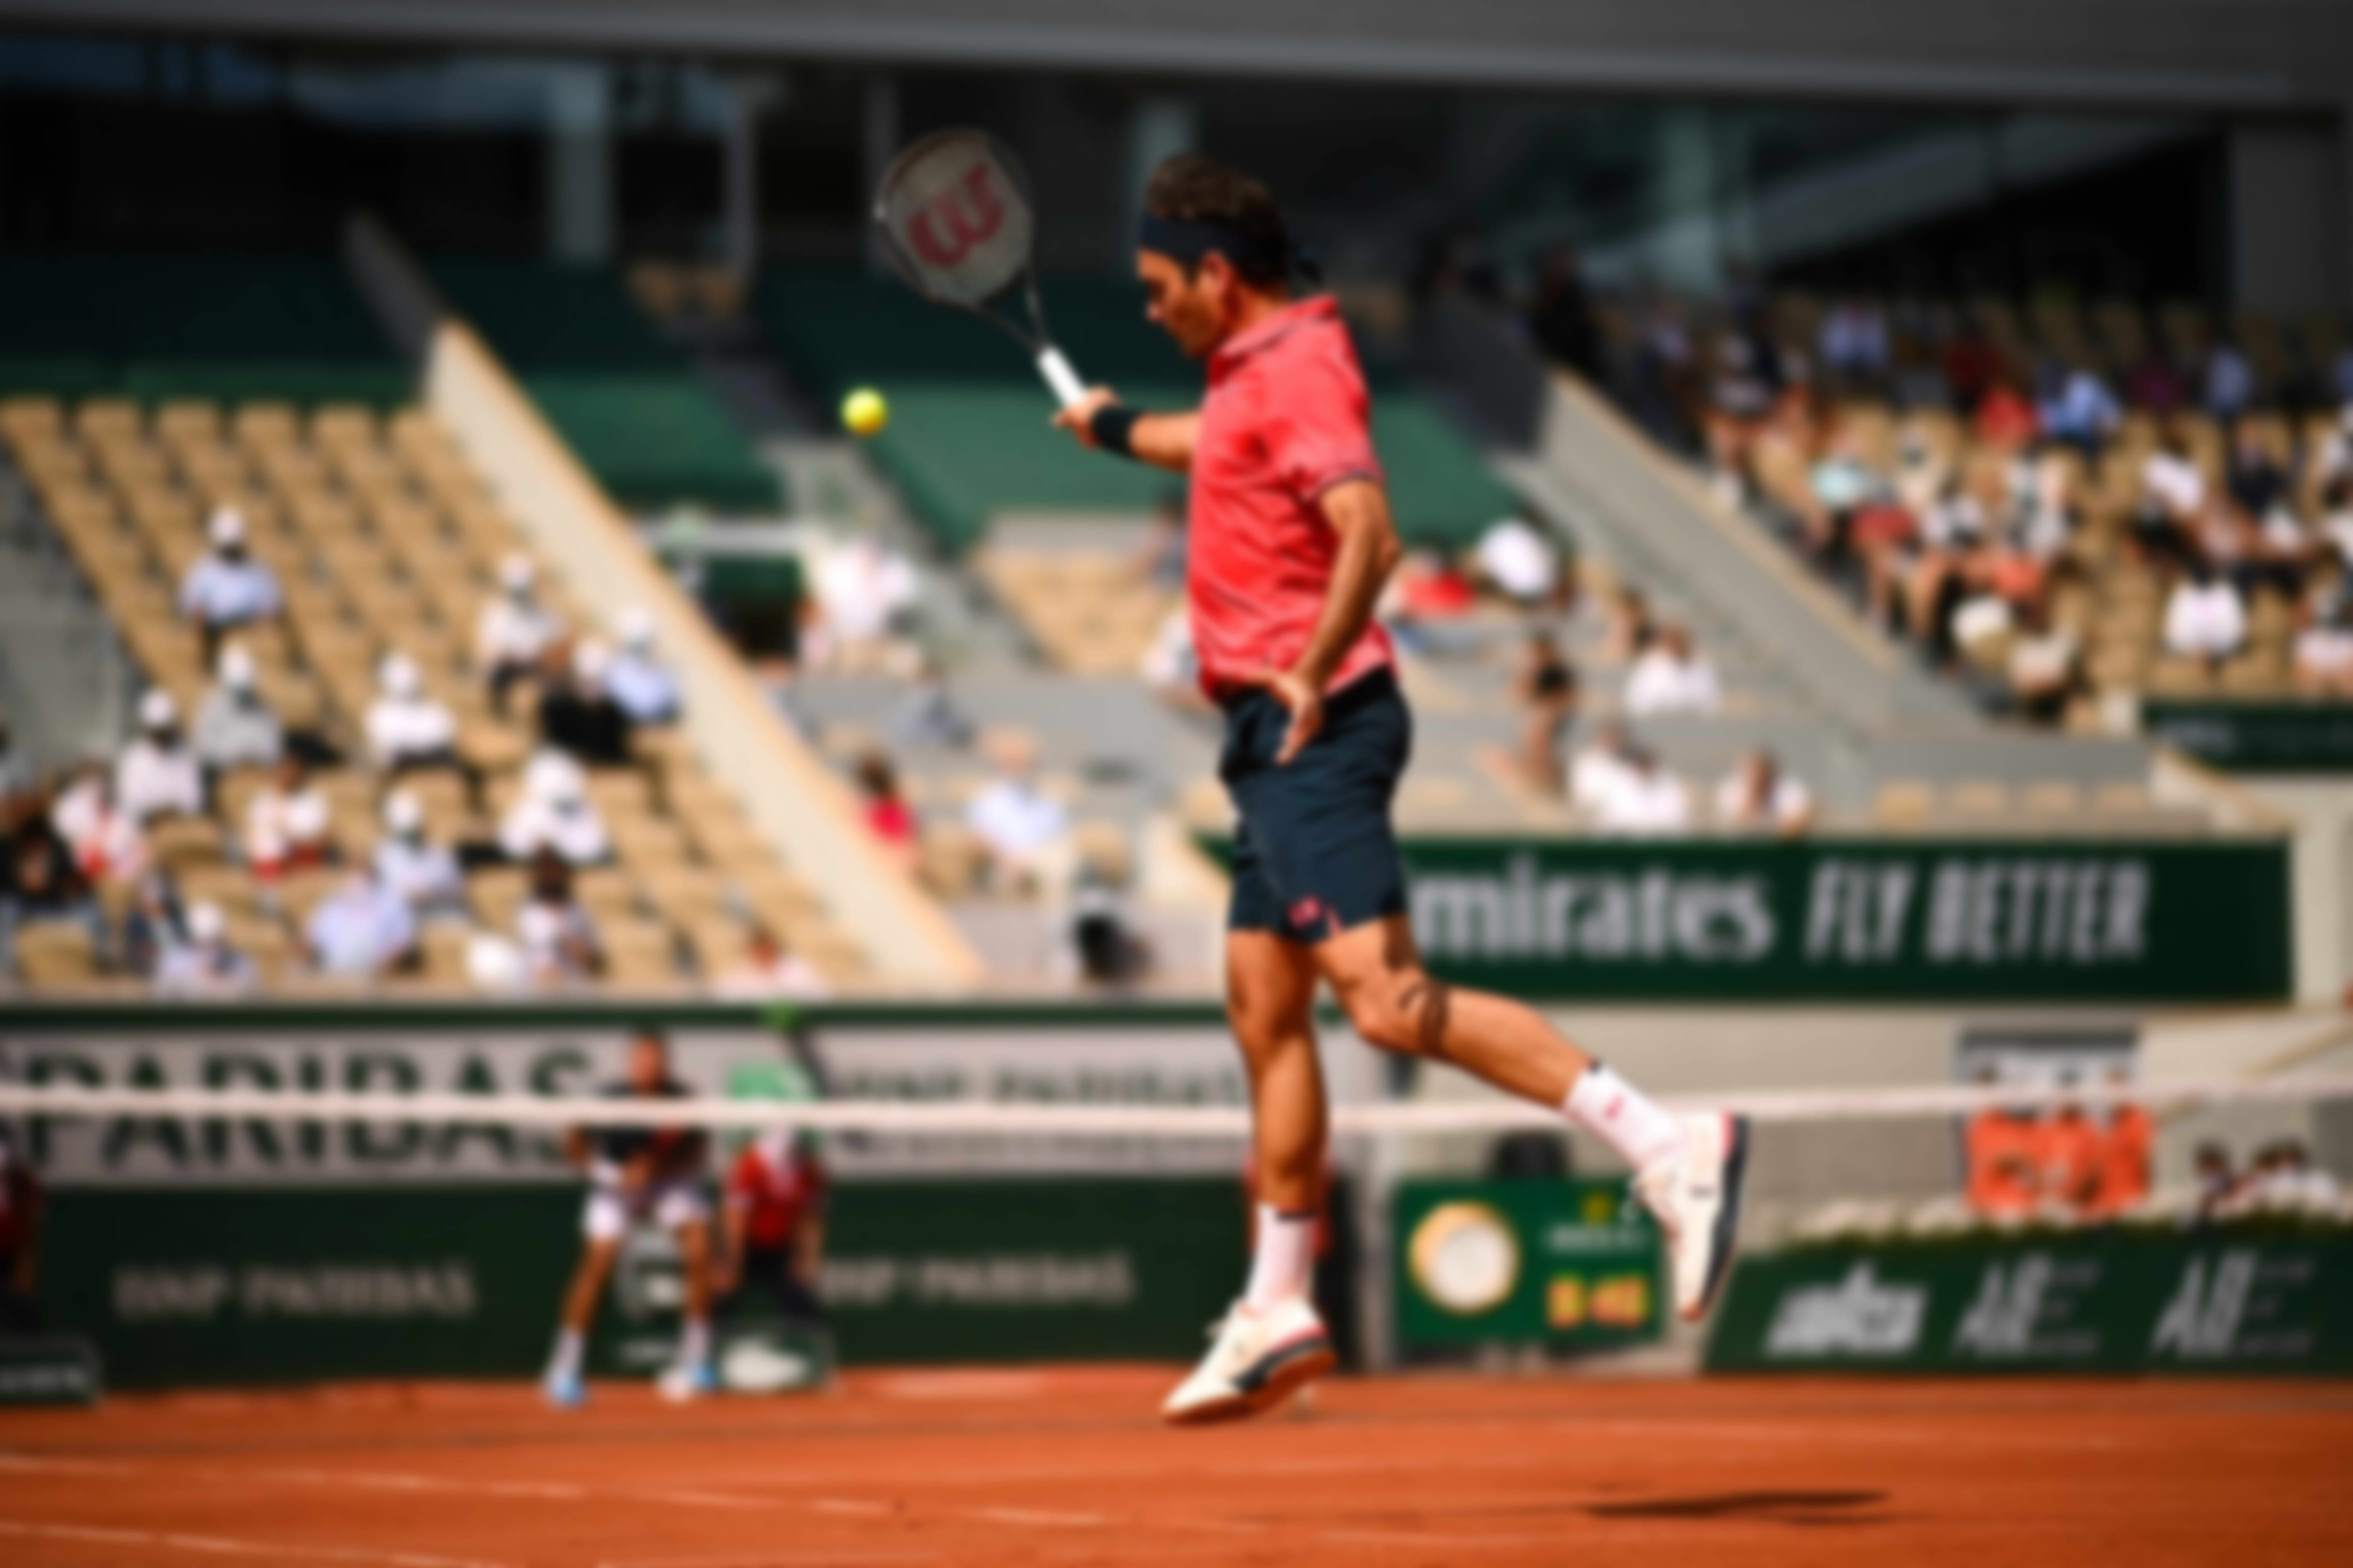 French Open: Gauff advances, Djokovic vs. Nadal looms 